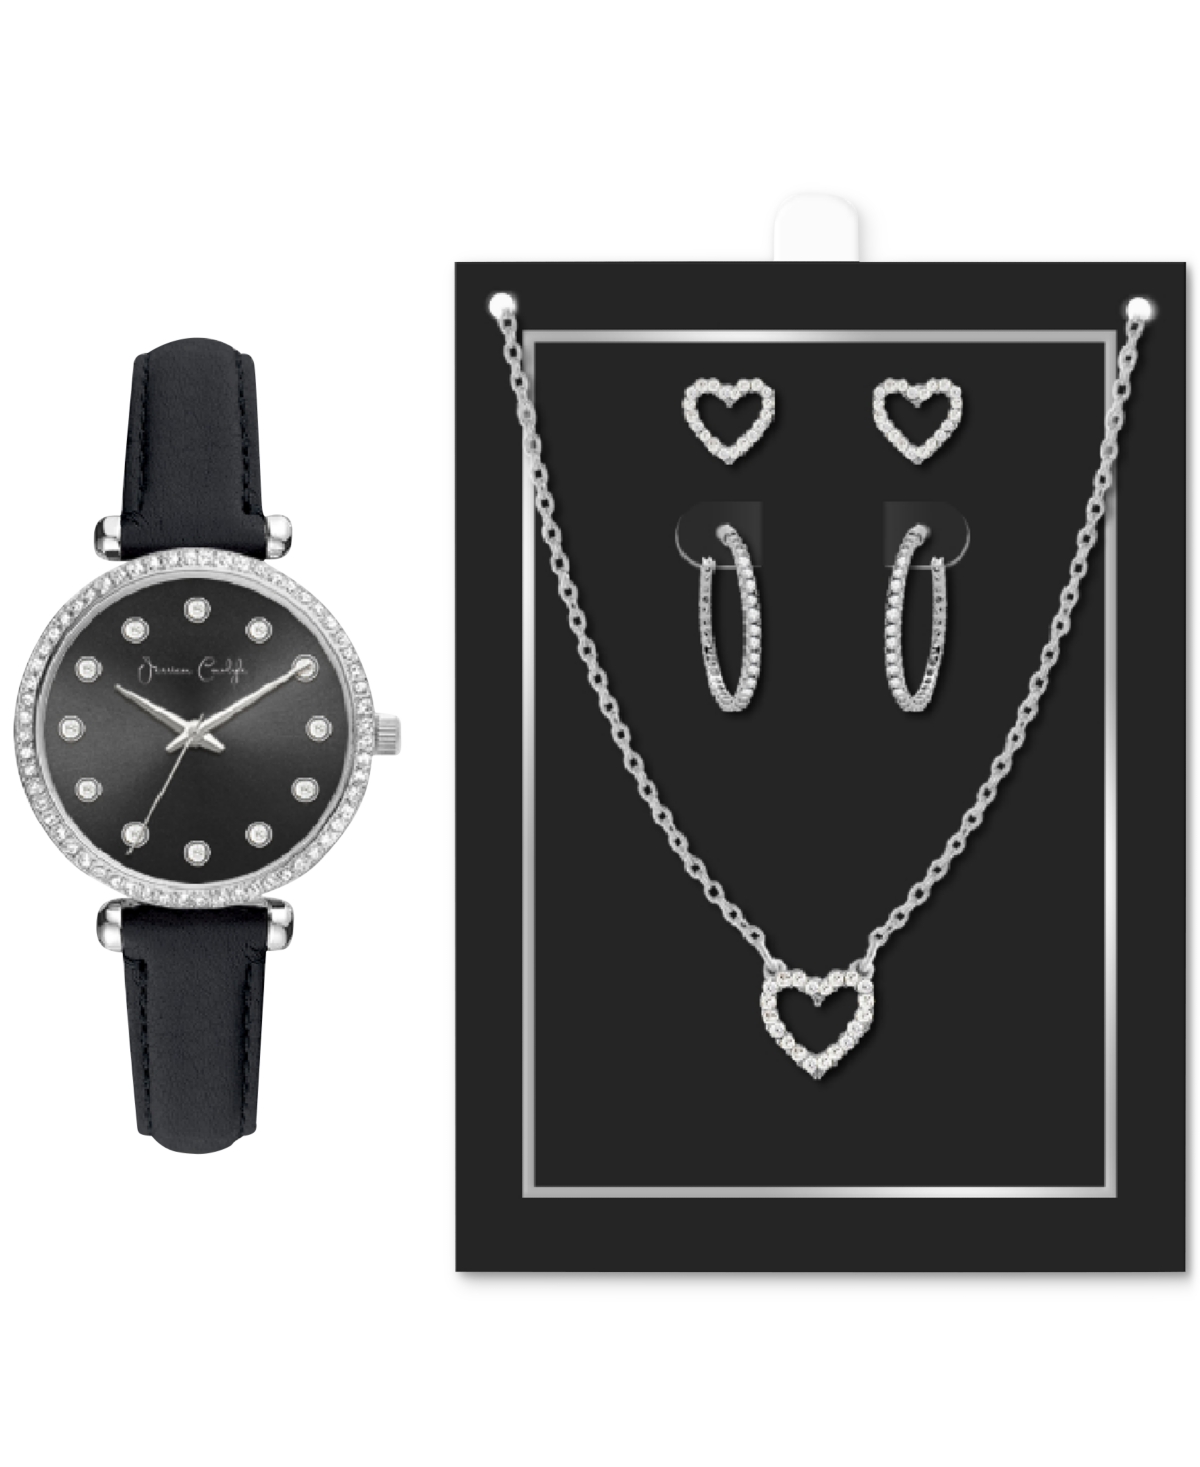 Women's Black Strap Watch 33mm Jewelry Gift Set - Gold